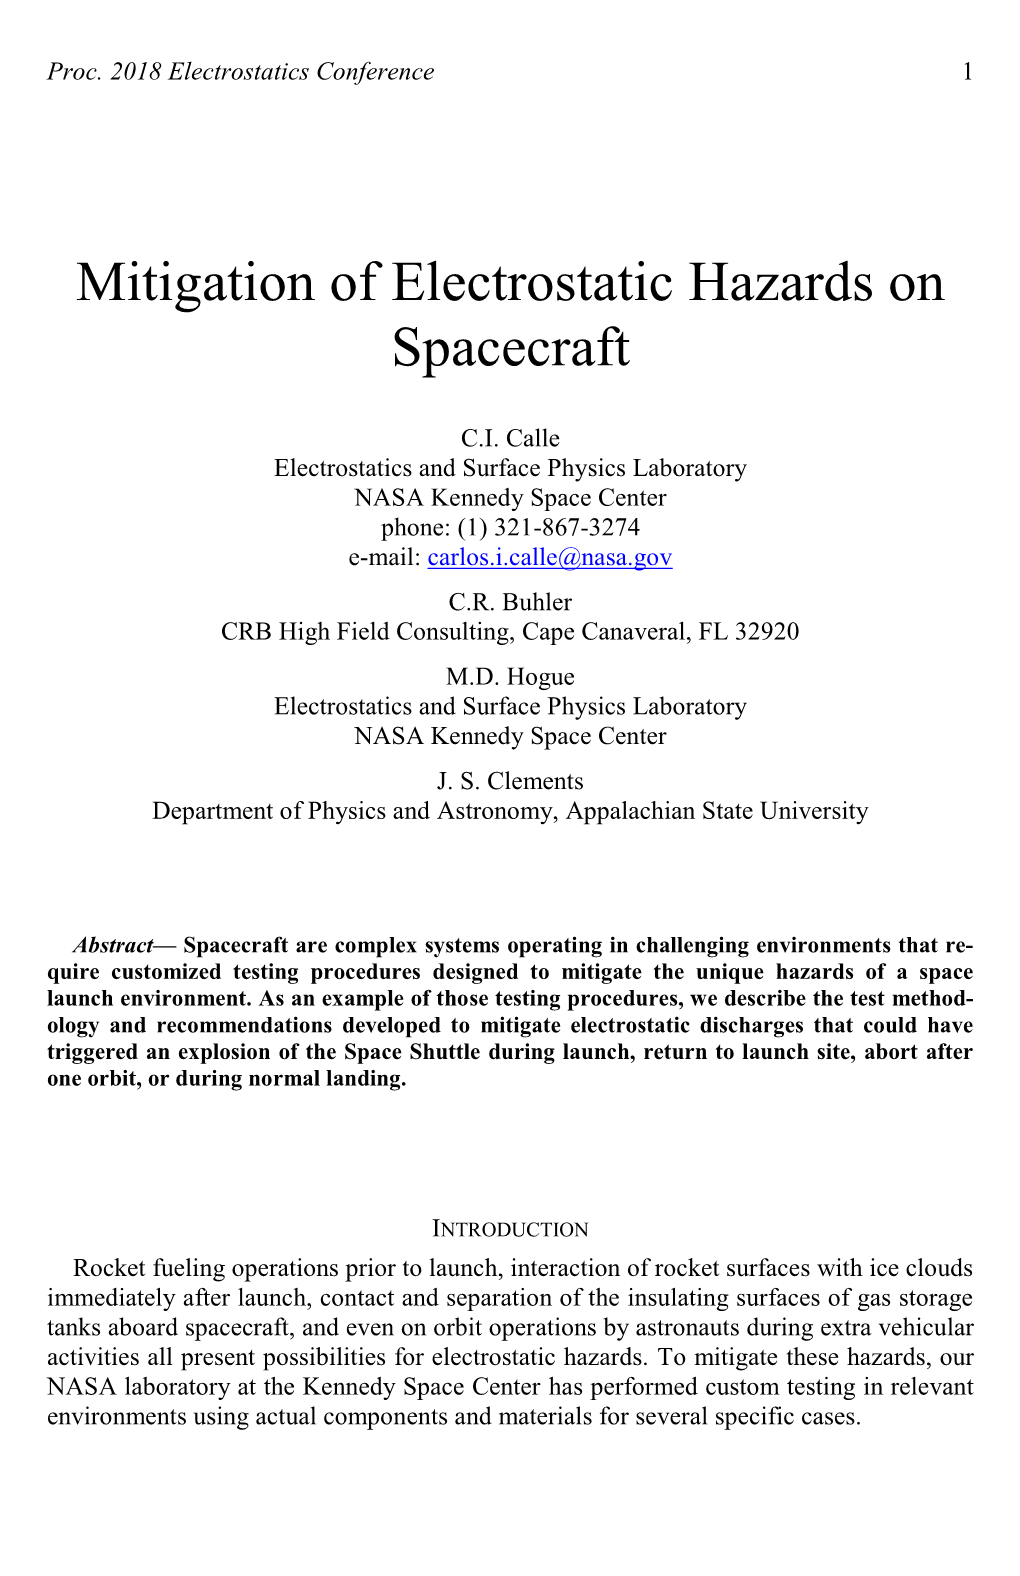 Mitigation of Electrostatic Hazards on Spacecraft